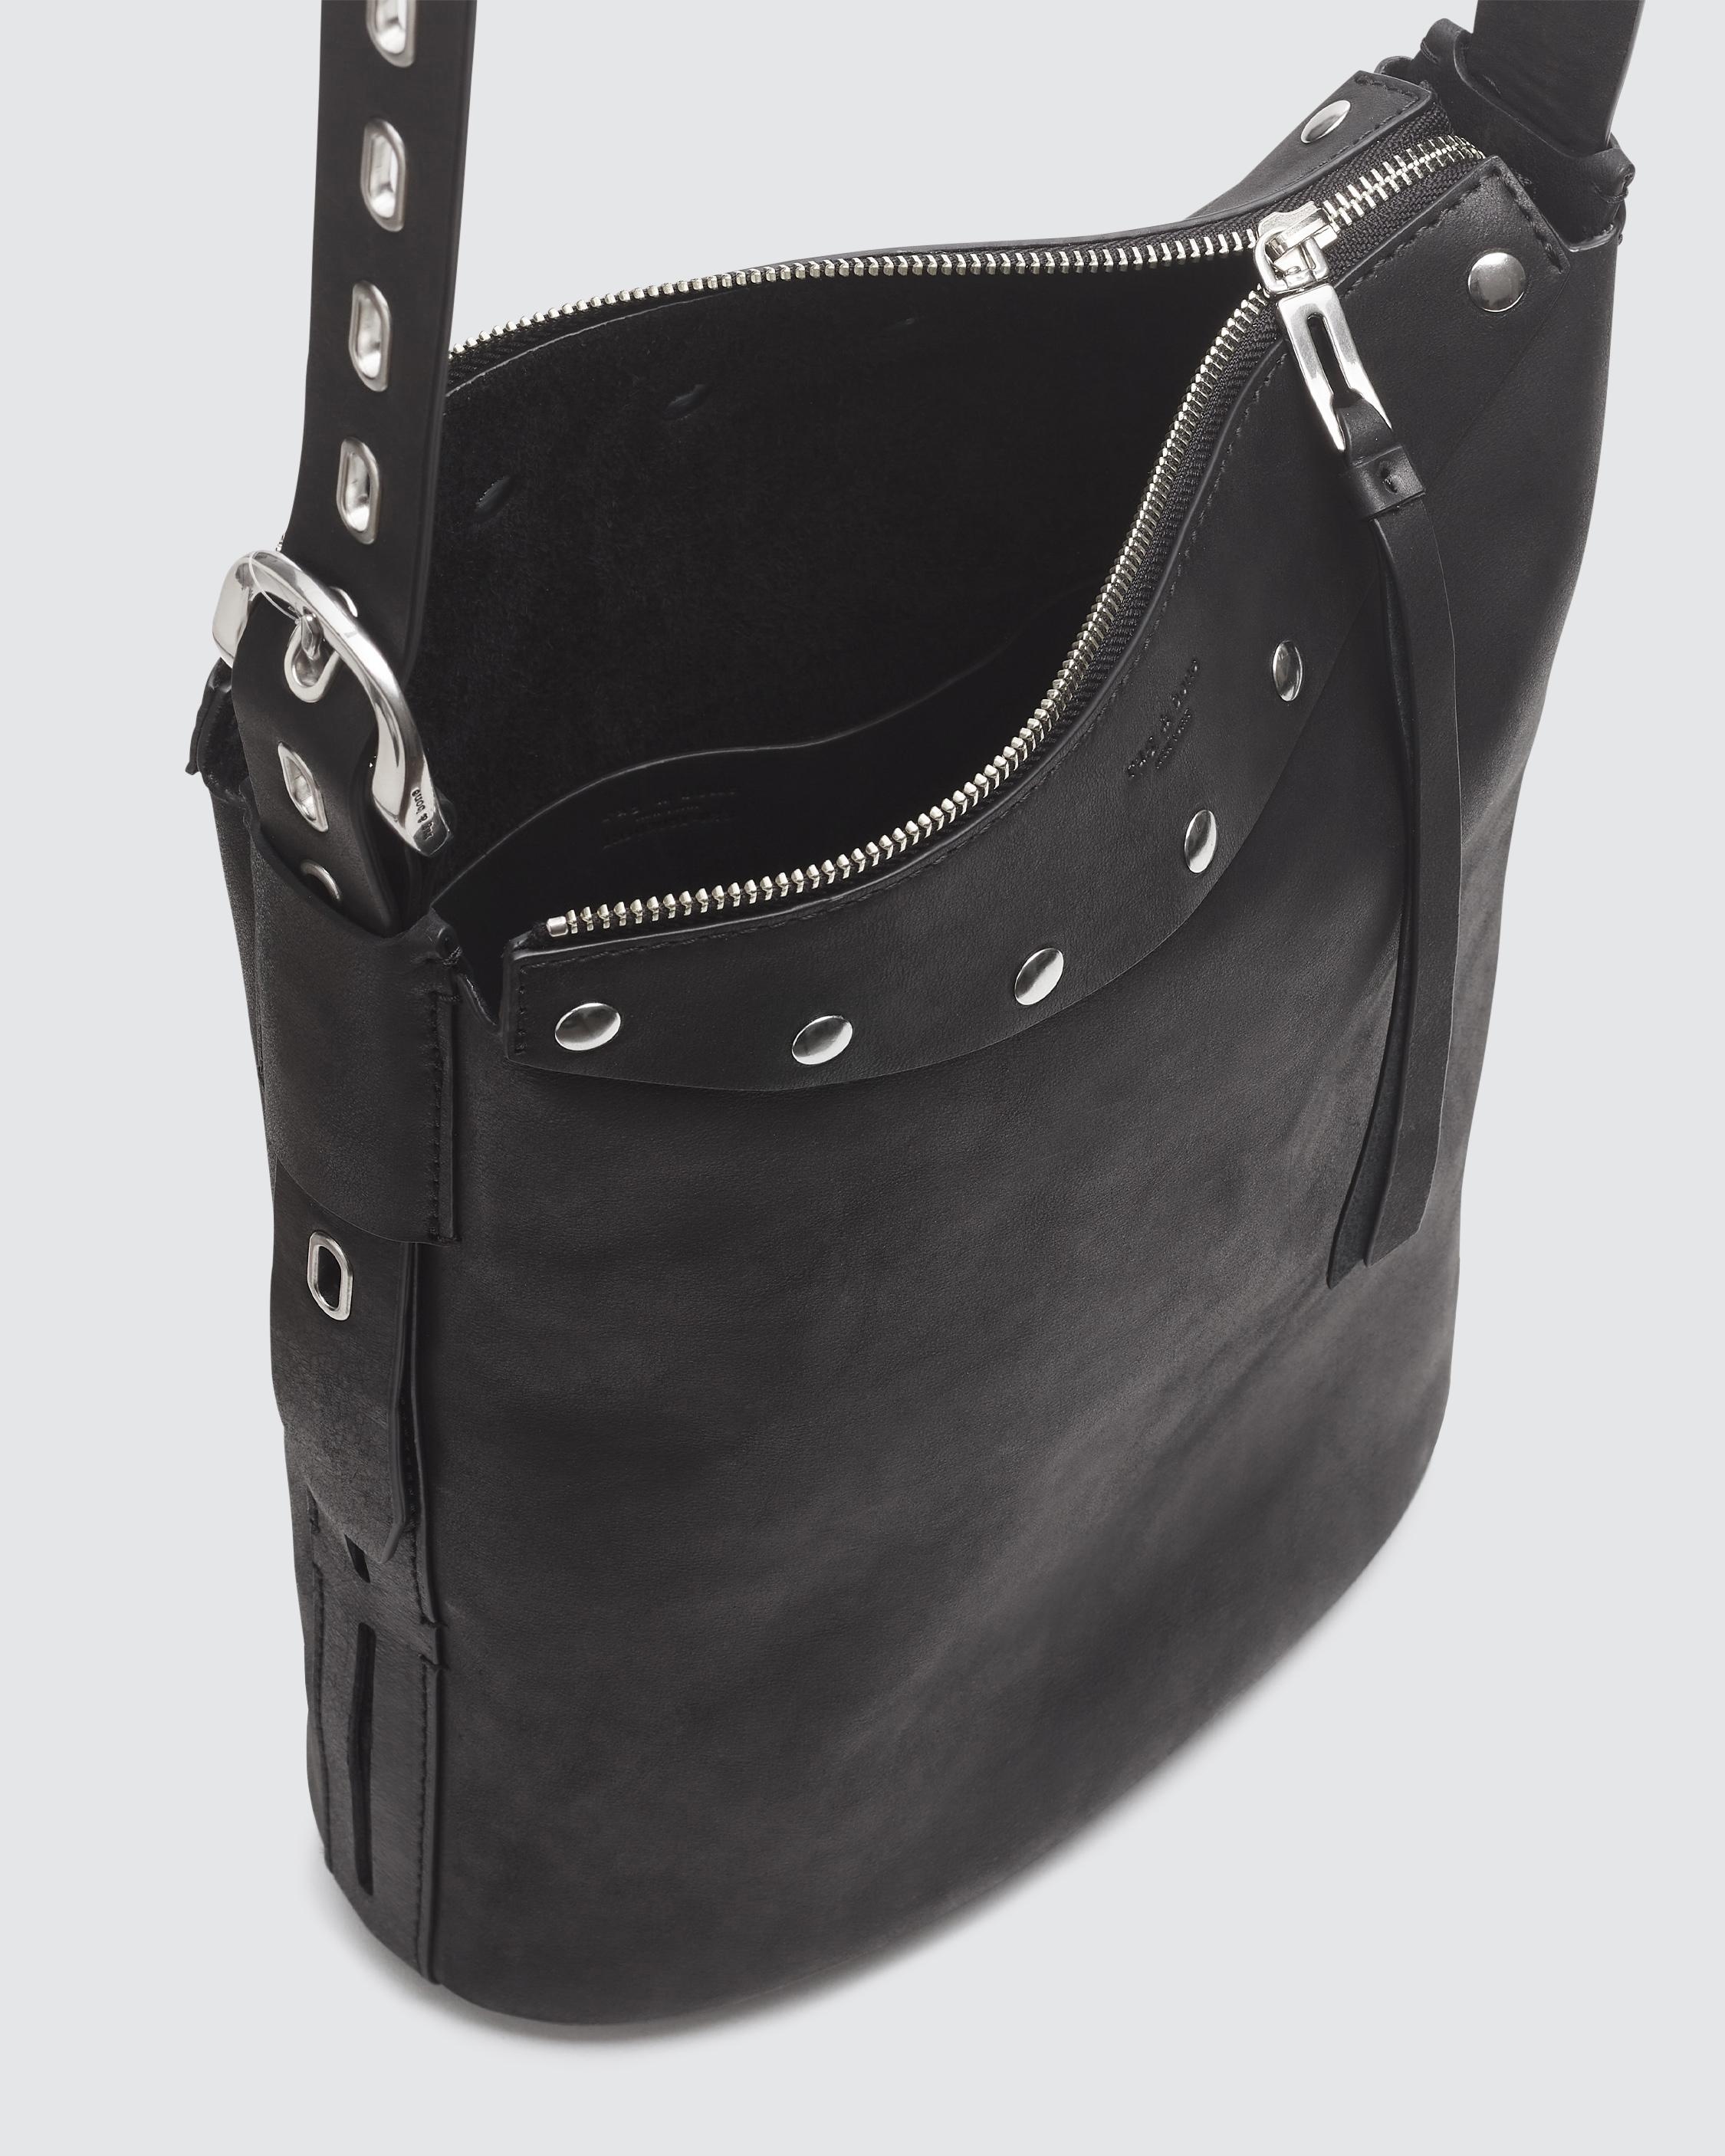 Belize Bucket Bag - Leather
Crossbody Bag - 4